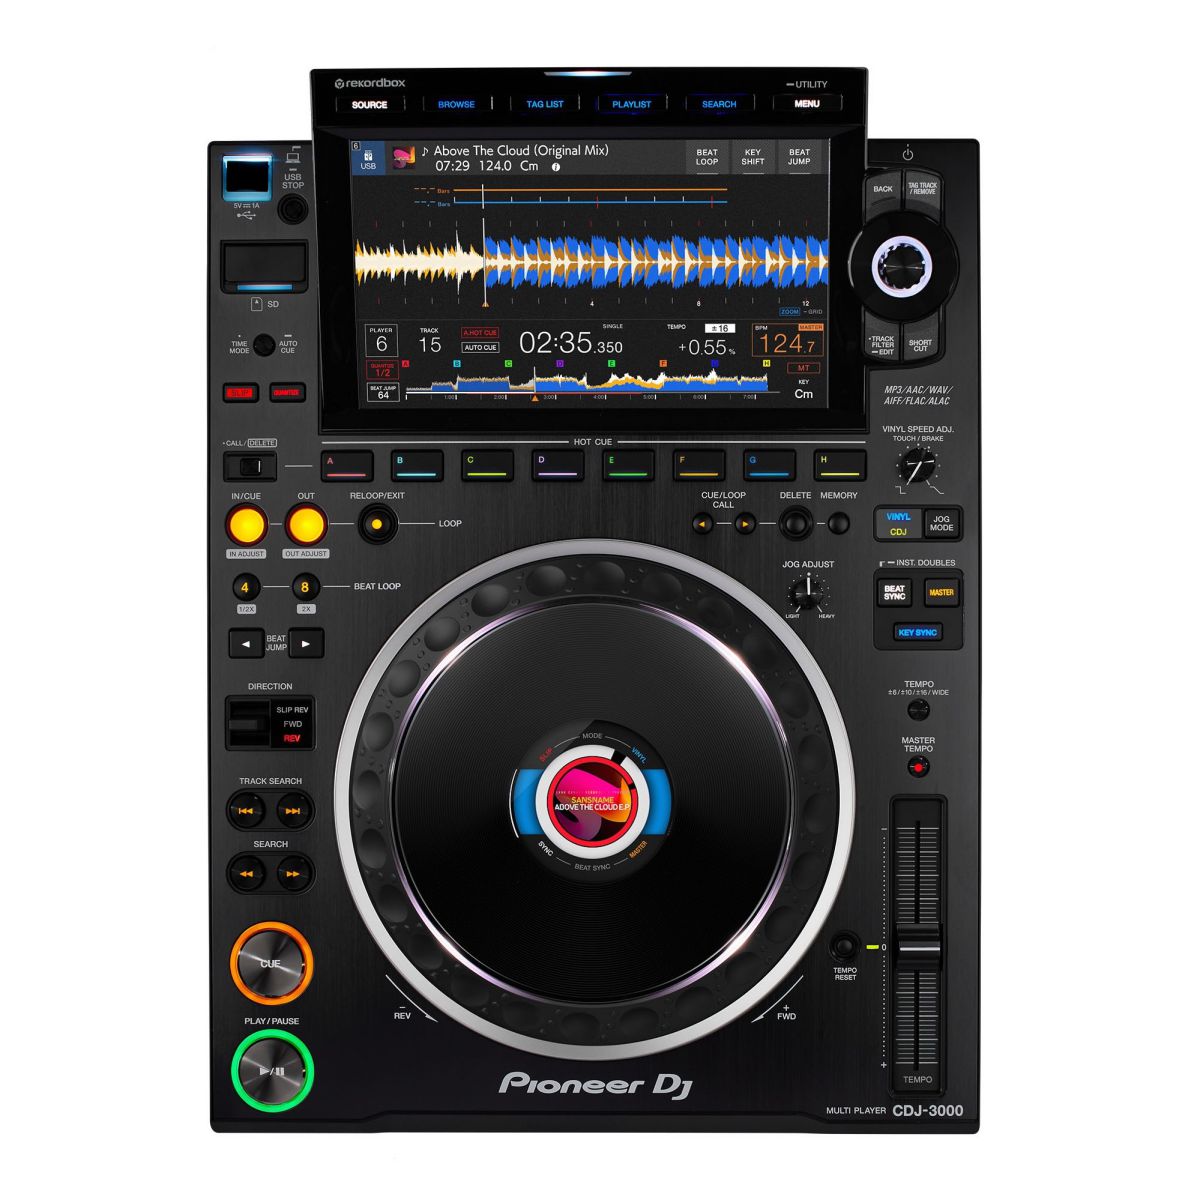 An image of Pioneer CDJ-3000 DJ Media Player